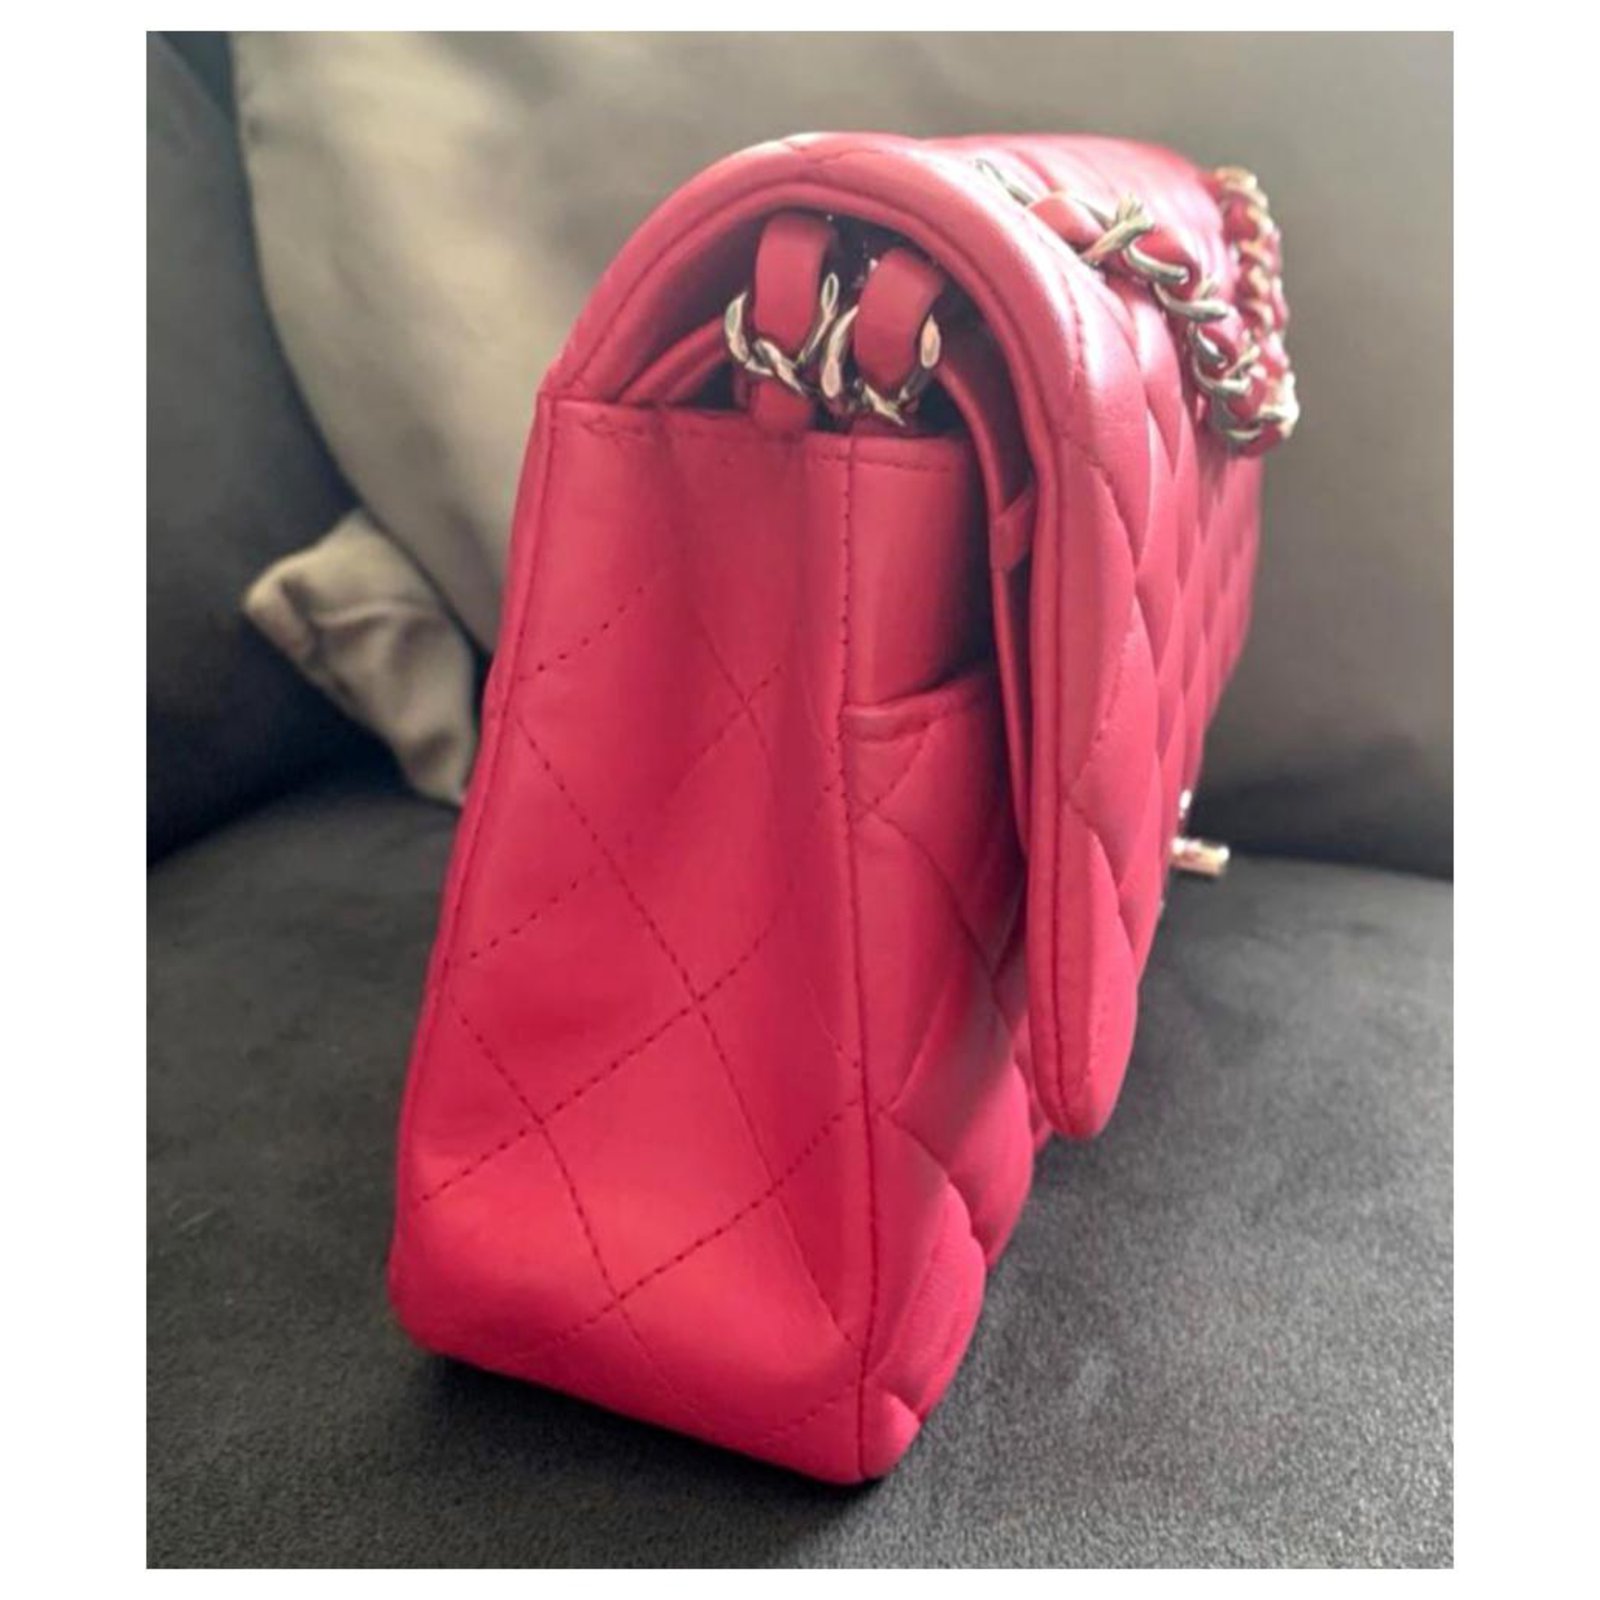 Chanel pink classic Medium Flap bag